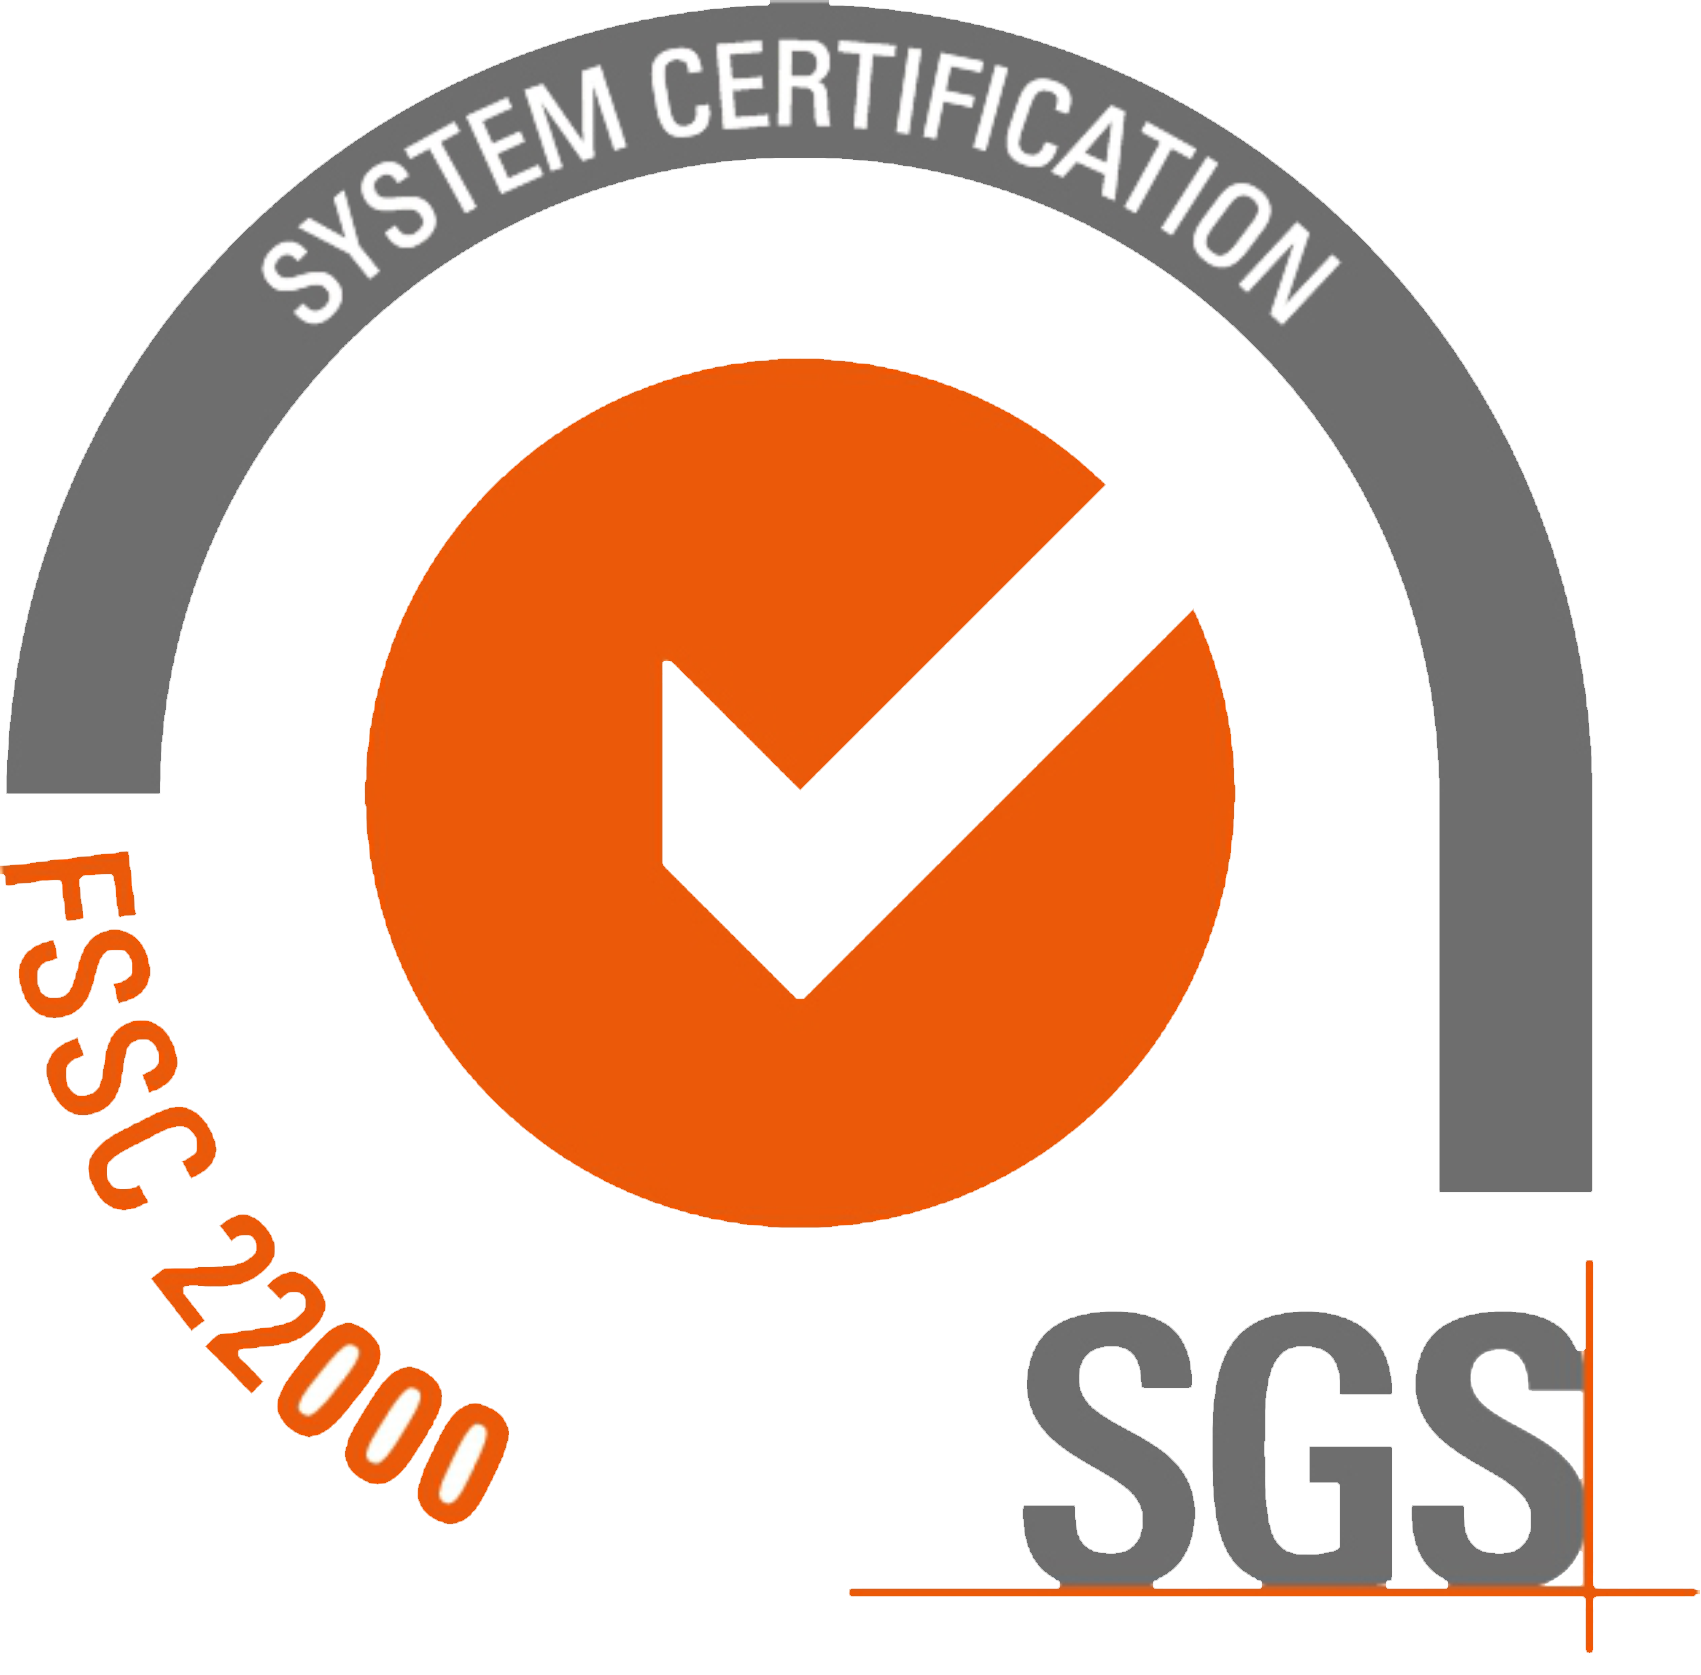 Food Safety System Certification FSSC 22000